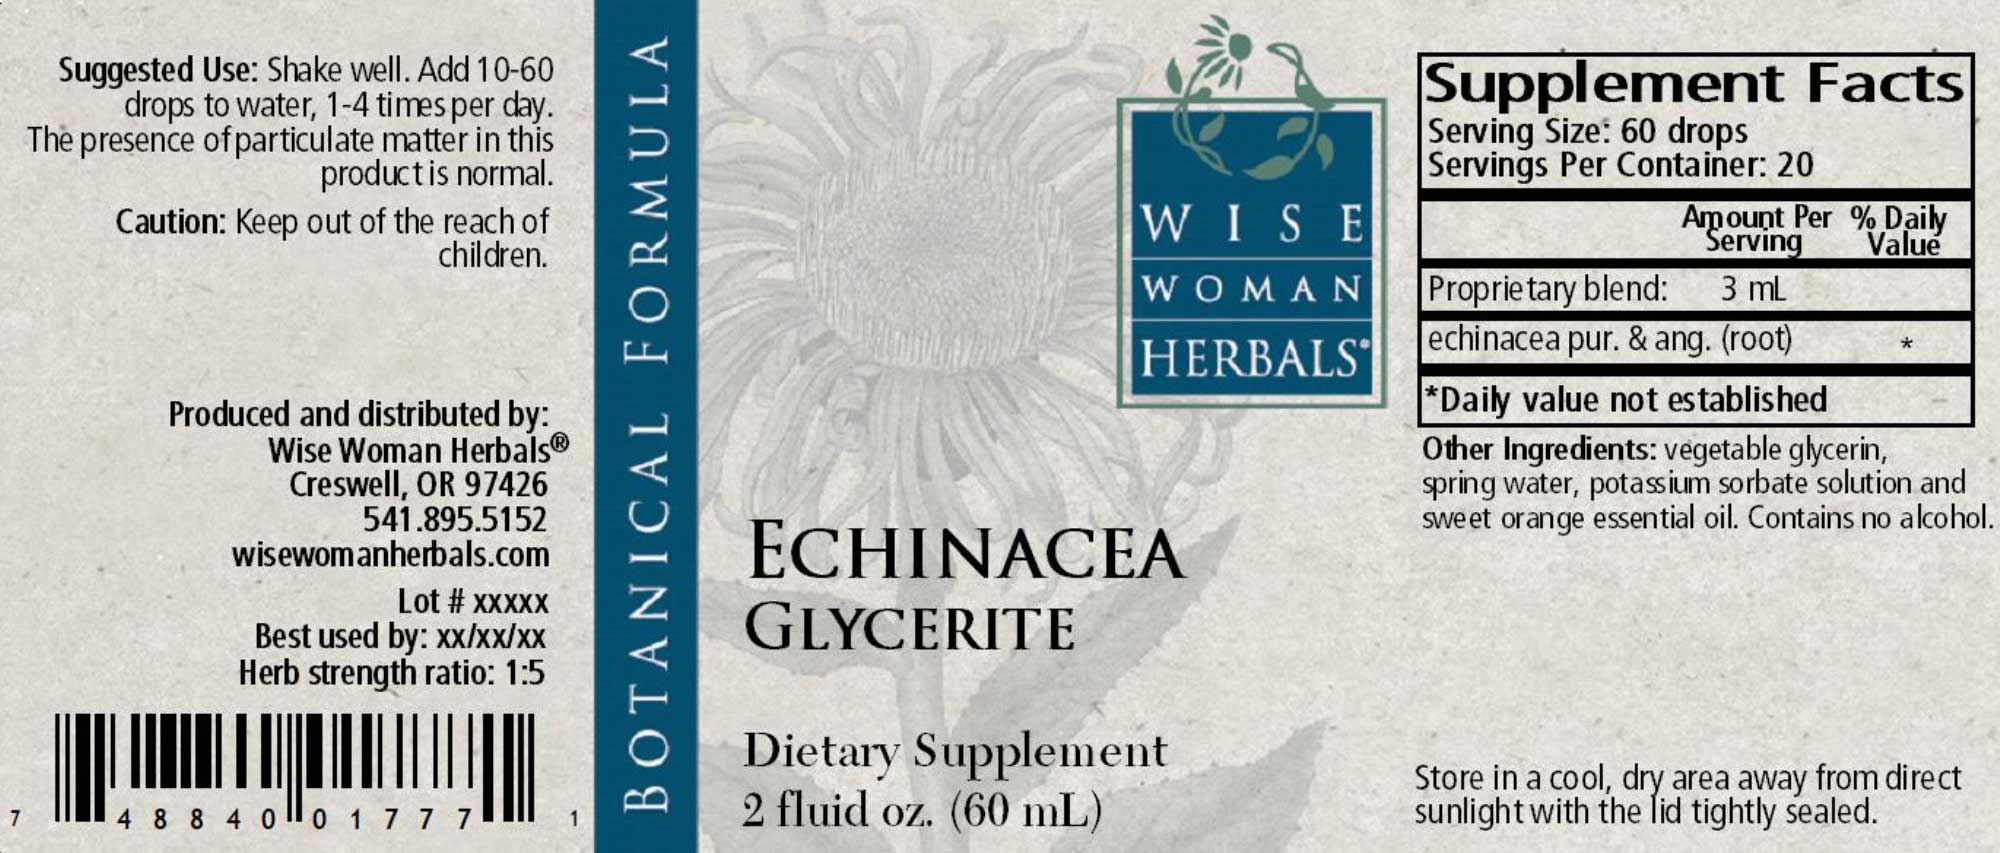 Wise Woman Herbals Echinacea Glycerite Label